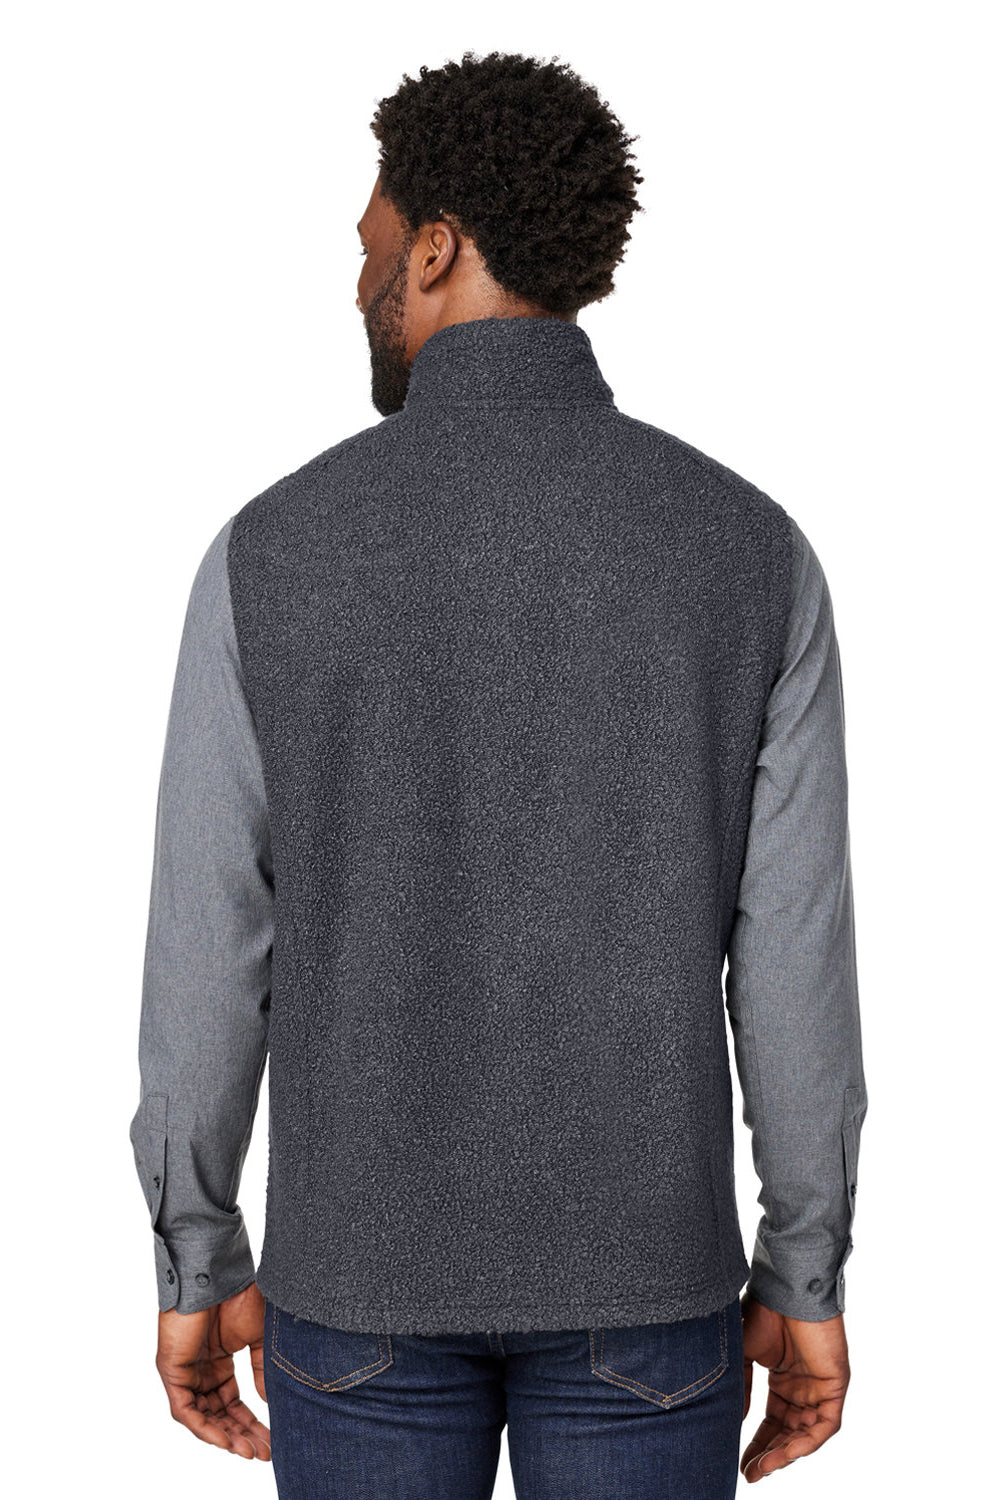 North End NE714 Mens Aura Sweater Fleece Full Zip Vest Carbon Grey Back